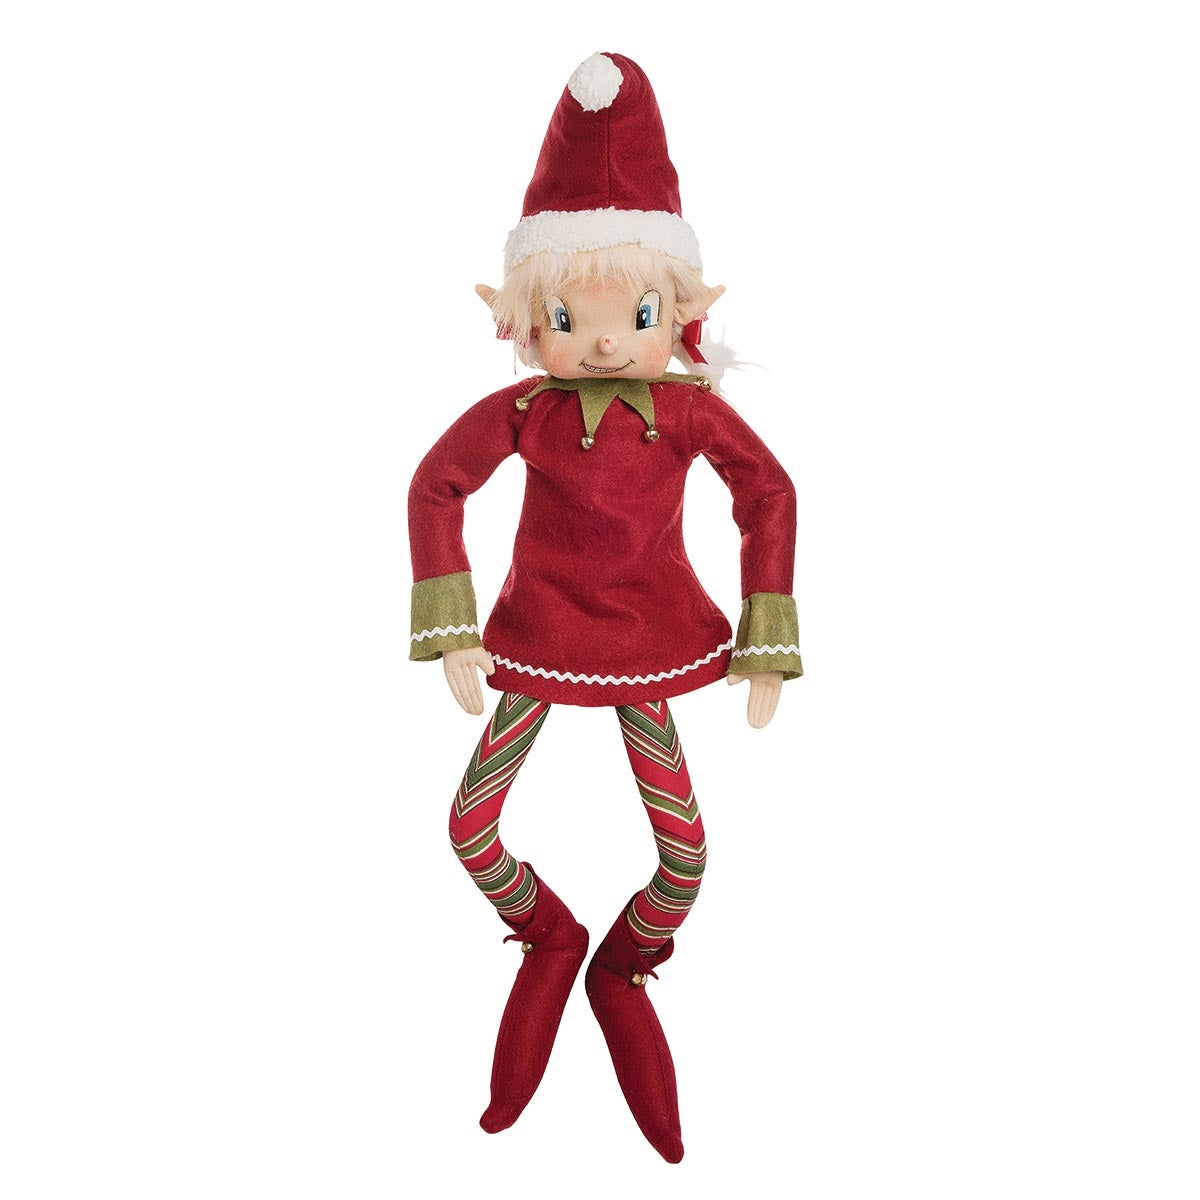 Joe Spencer Aggie Elf Doll - Christmas 2019